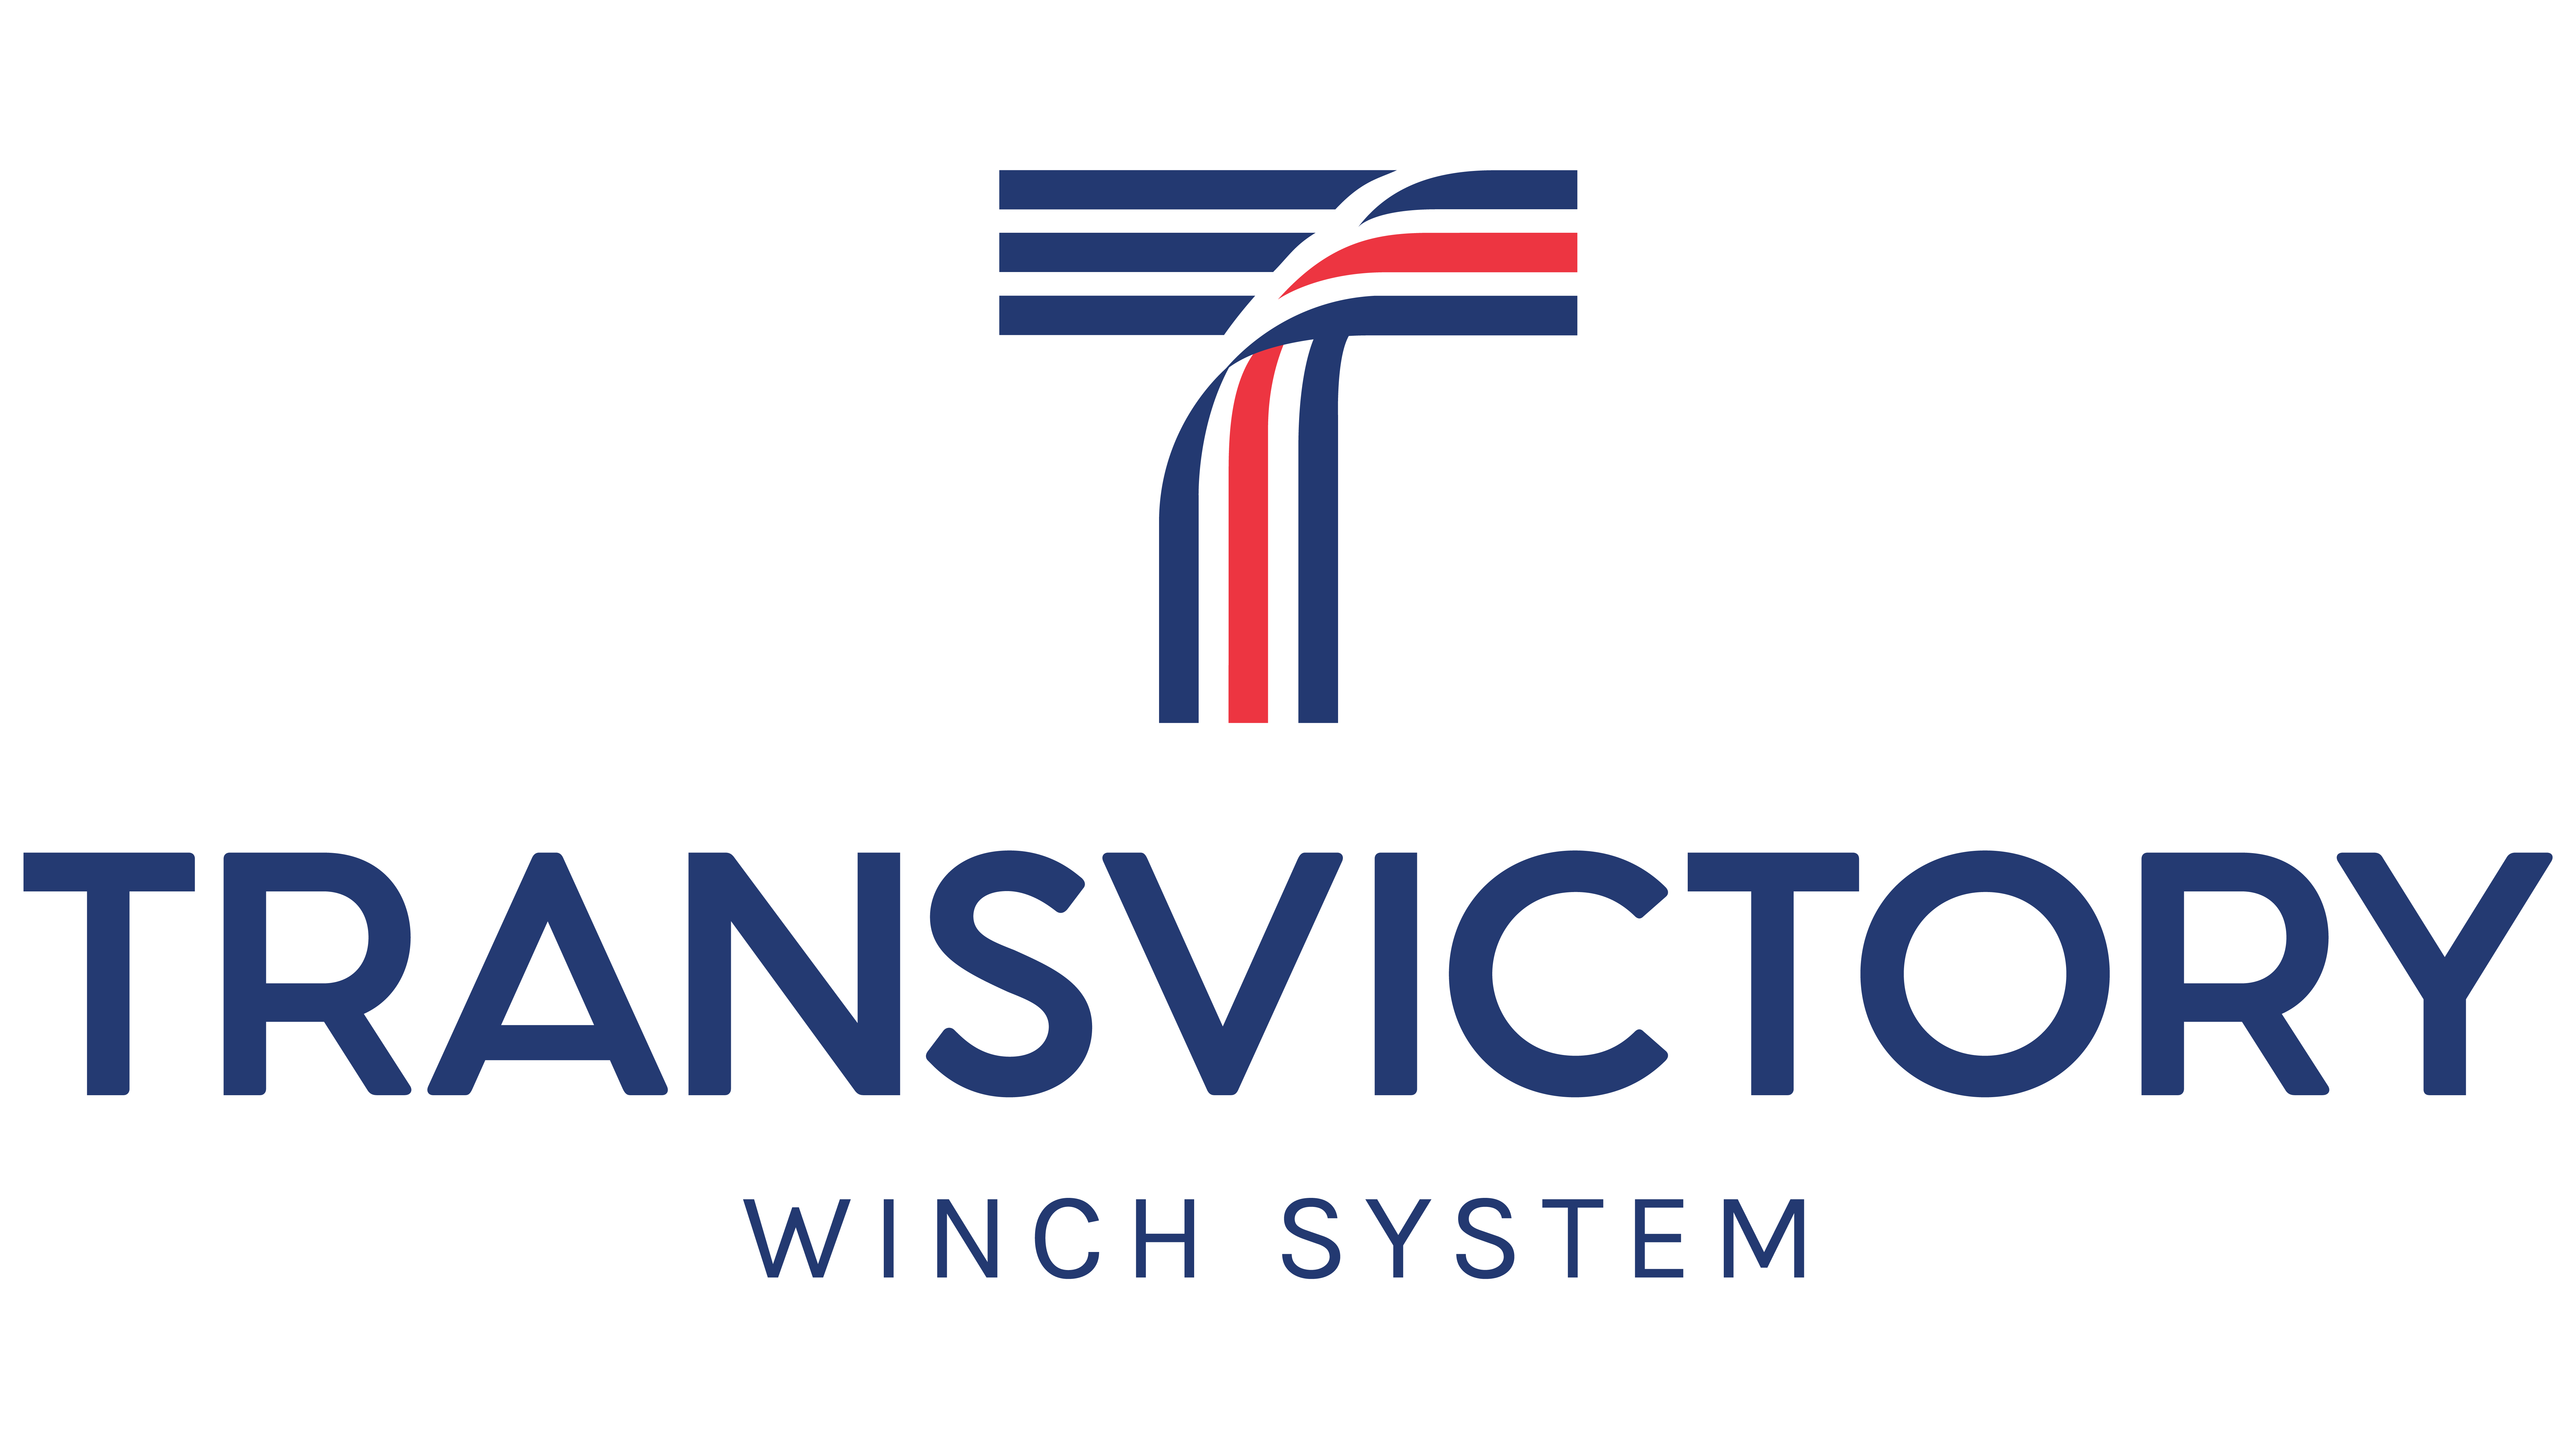 Transvictory Winch System